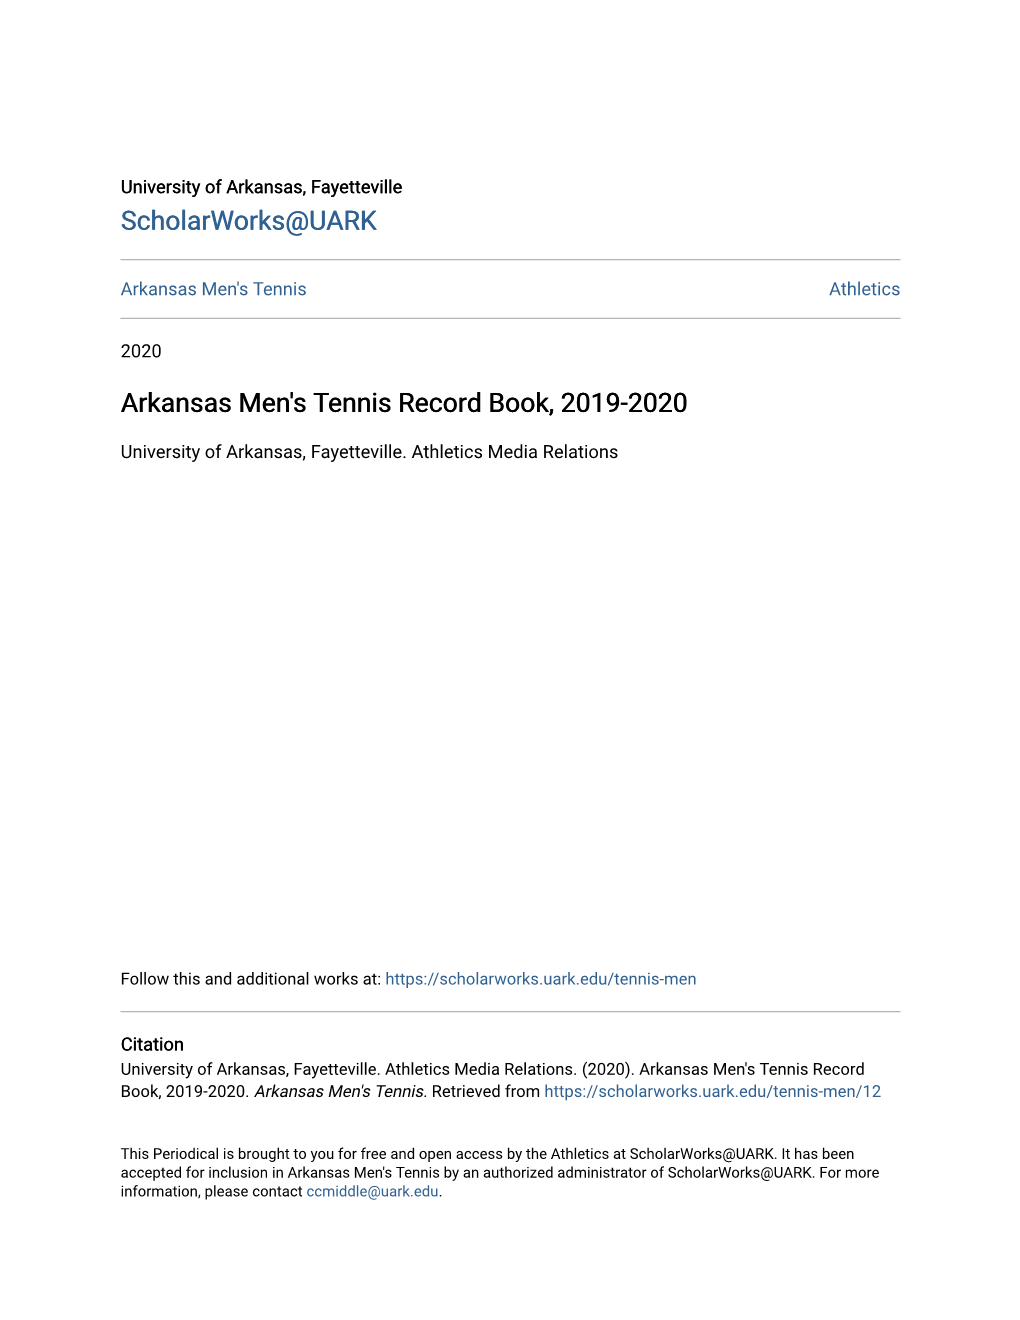 Arkansas Men's Tennis Record Book, 2019-2020